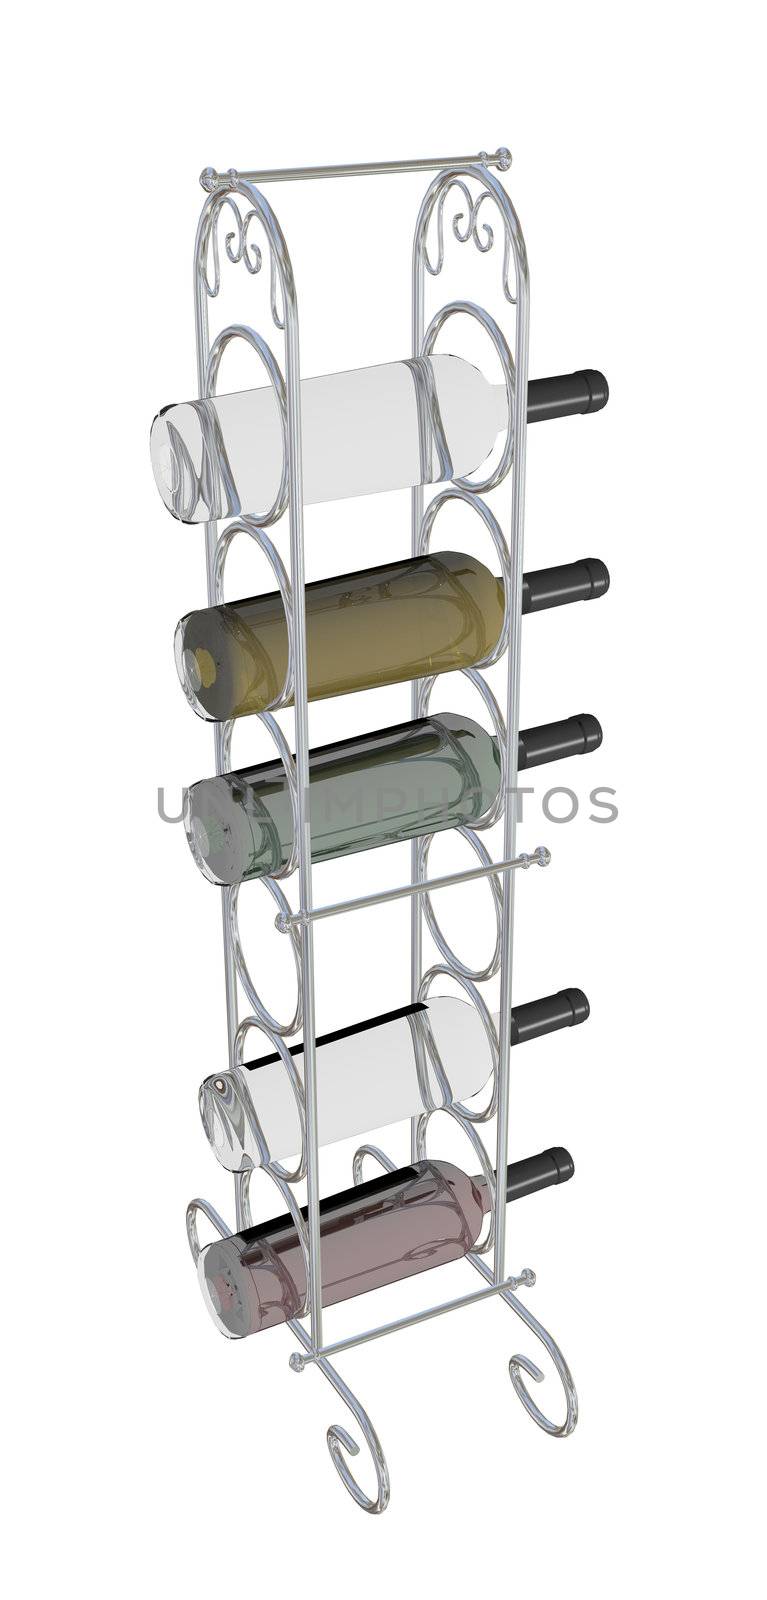 Wine bottles placed on a metal wine rack, 3D illustration by Morphart